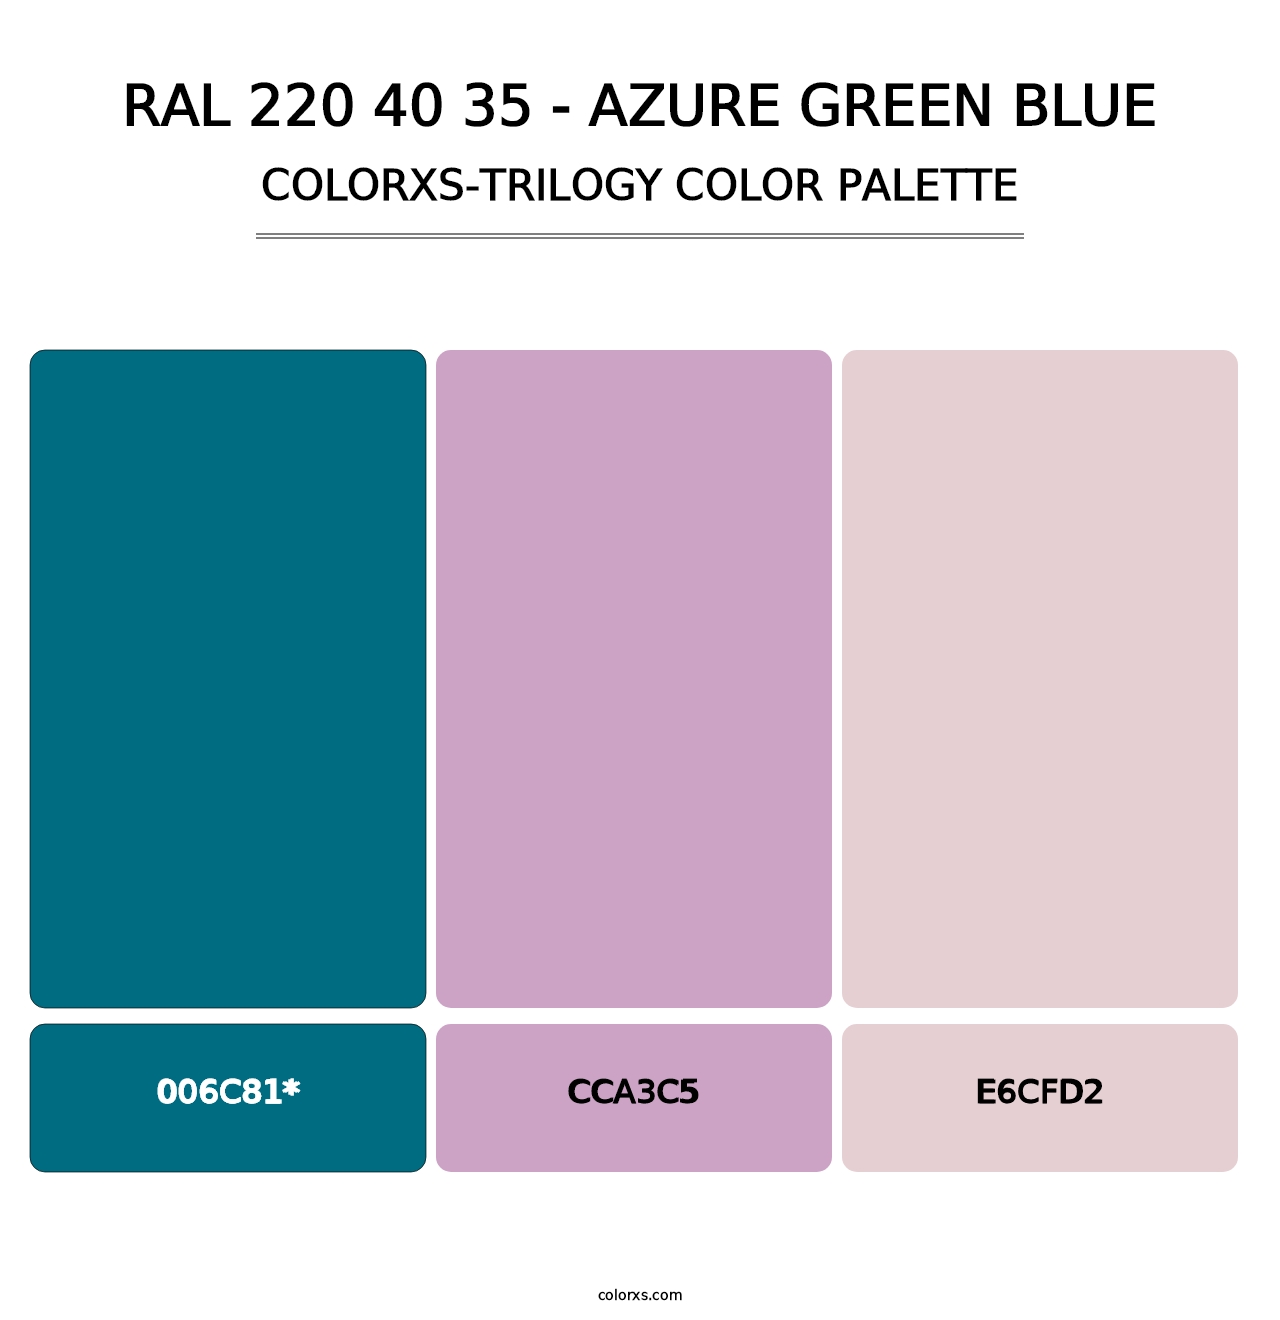 RAL 220 40 35 - Azure Green Blue - Colorxs Trilogy Palette